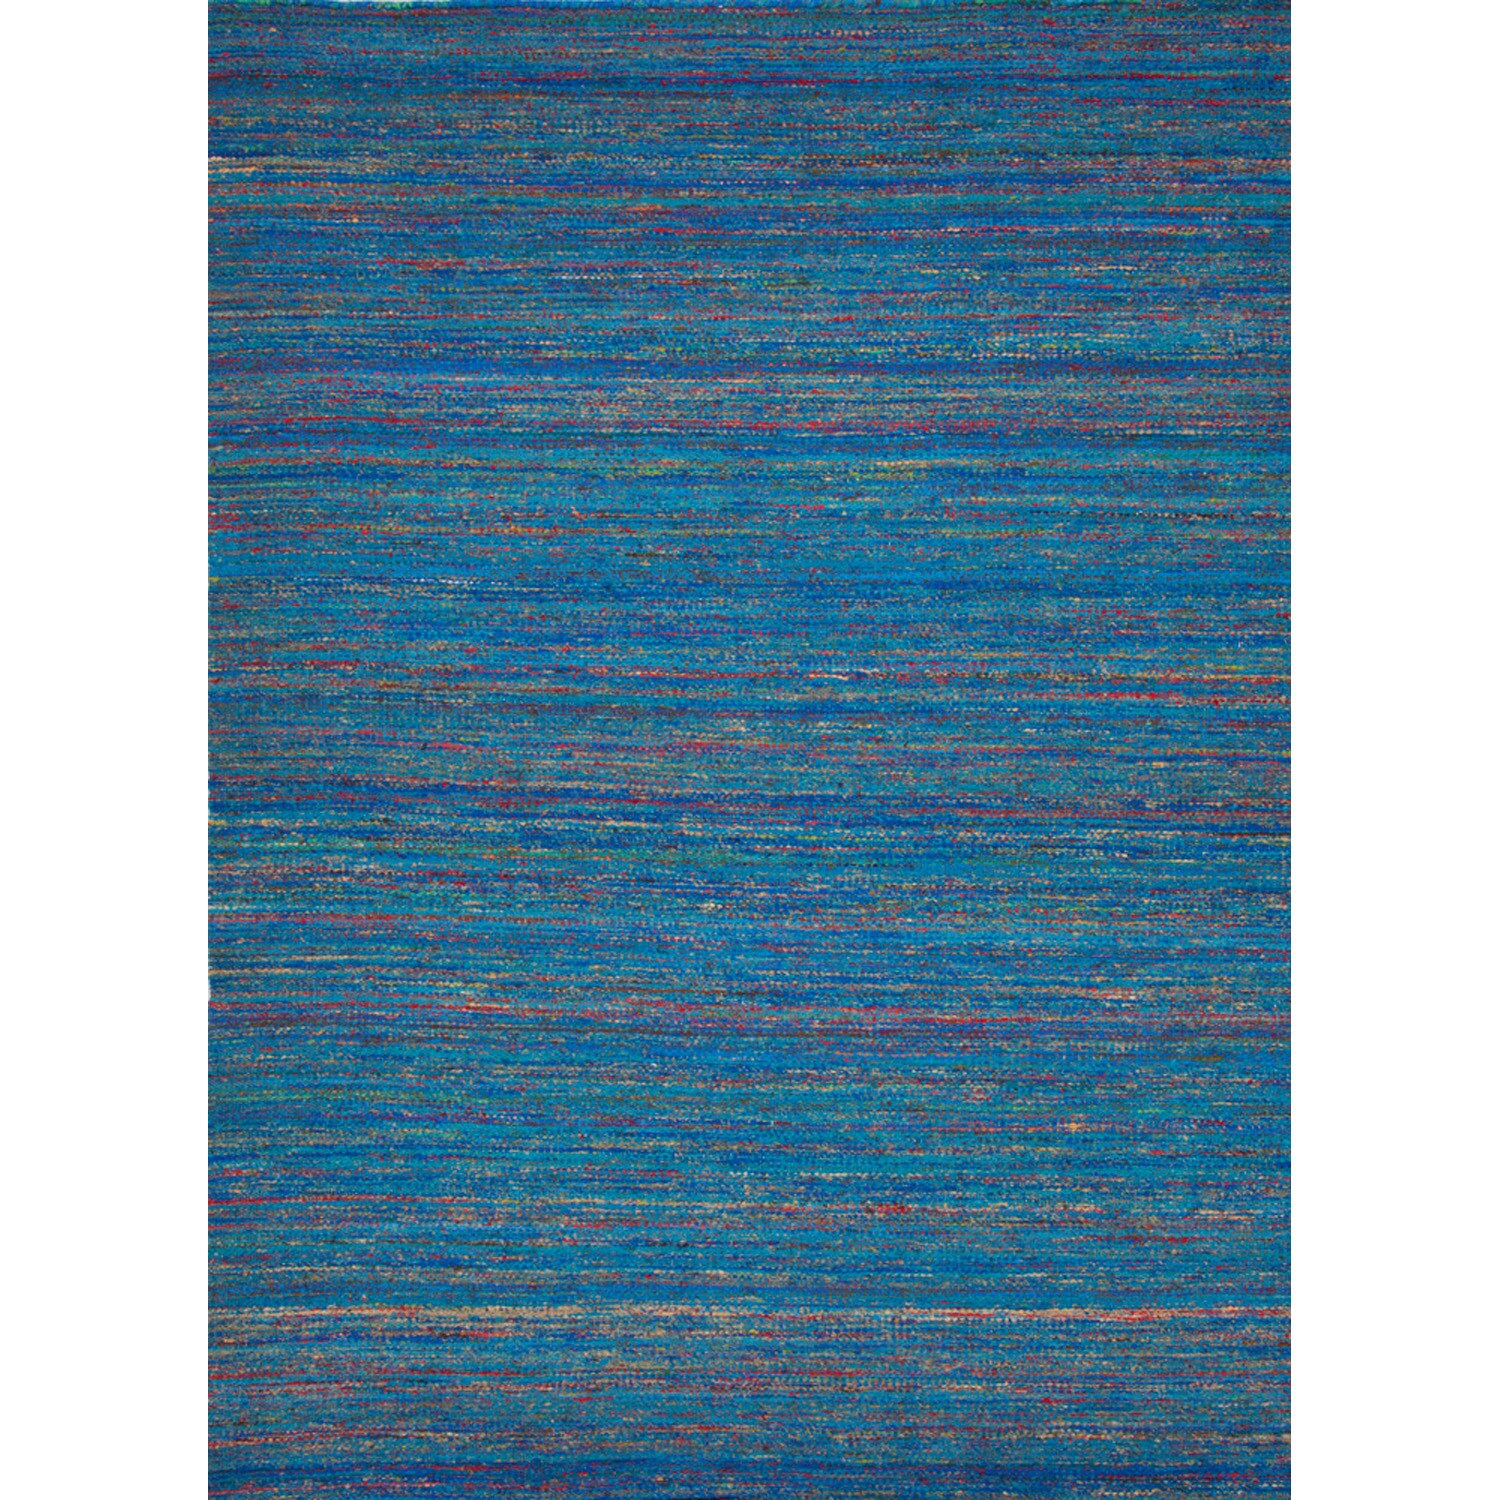 Handmade Flat Weave Solid Pattern Blue Rug (8 X 11)